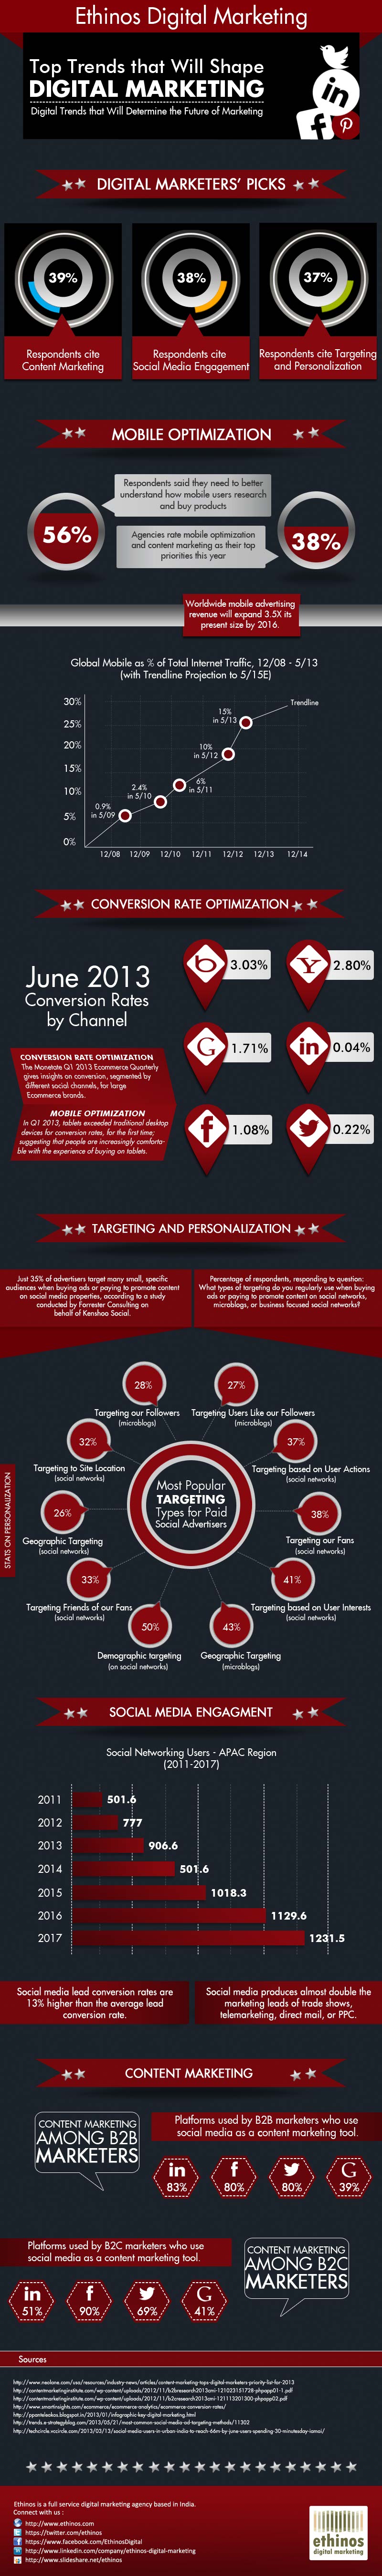 Digital Marketing Trends 2013-Infographic